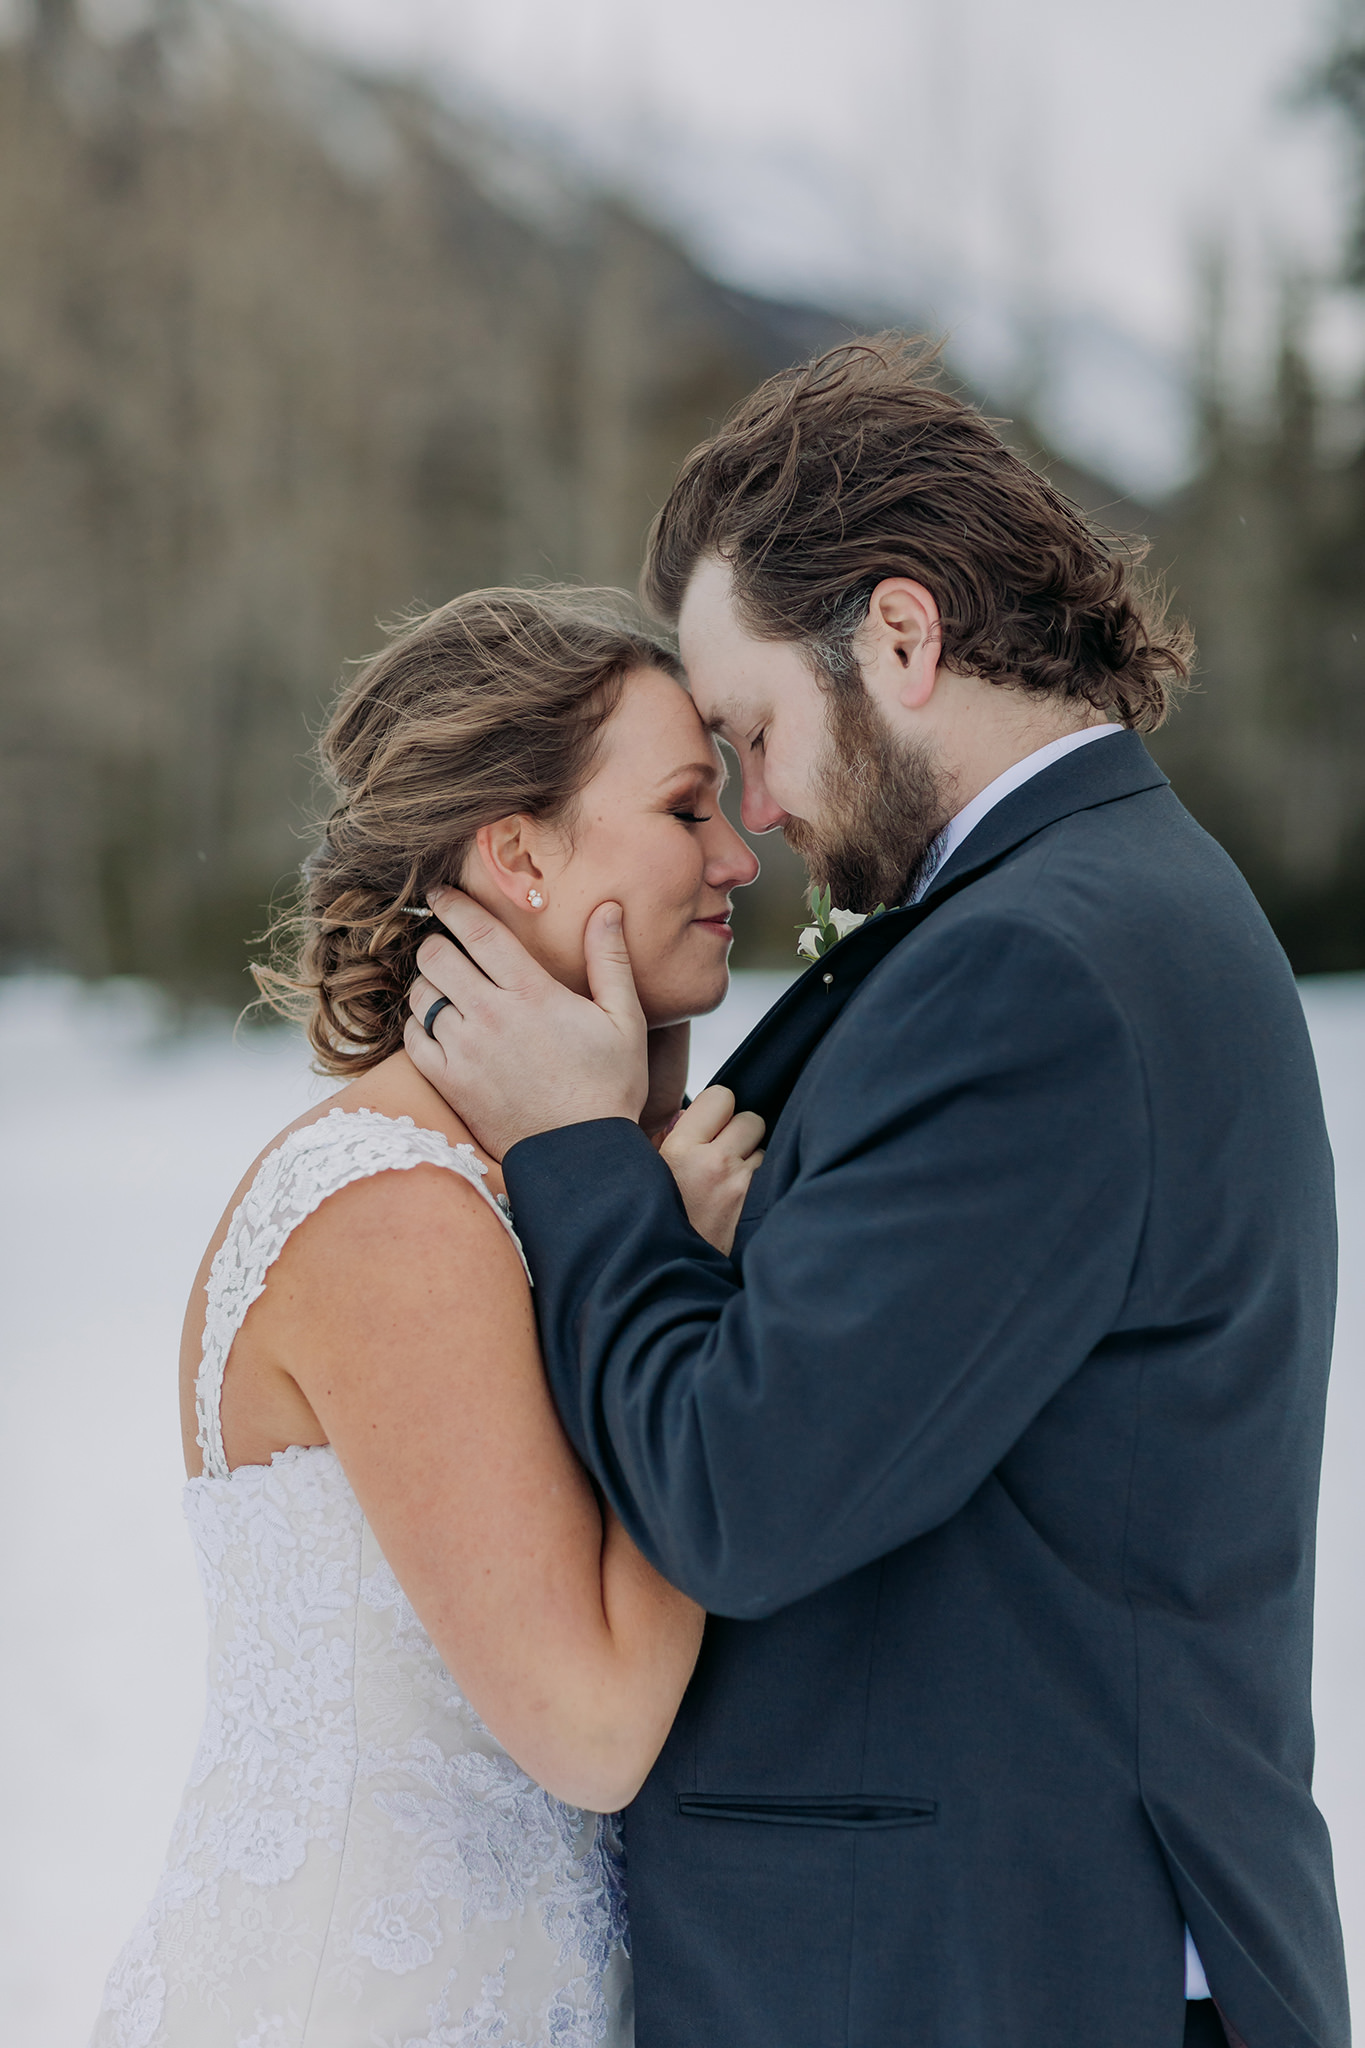 Bow Falls bride & groom portraits Winter mountain wedding photos by Banff Elopement Photographer ENV Photography